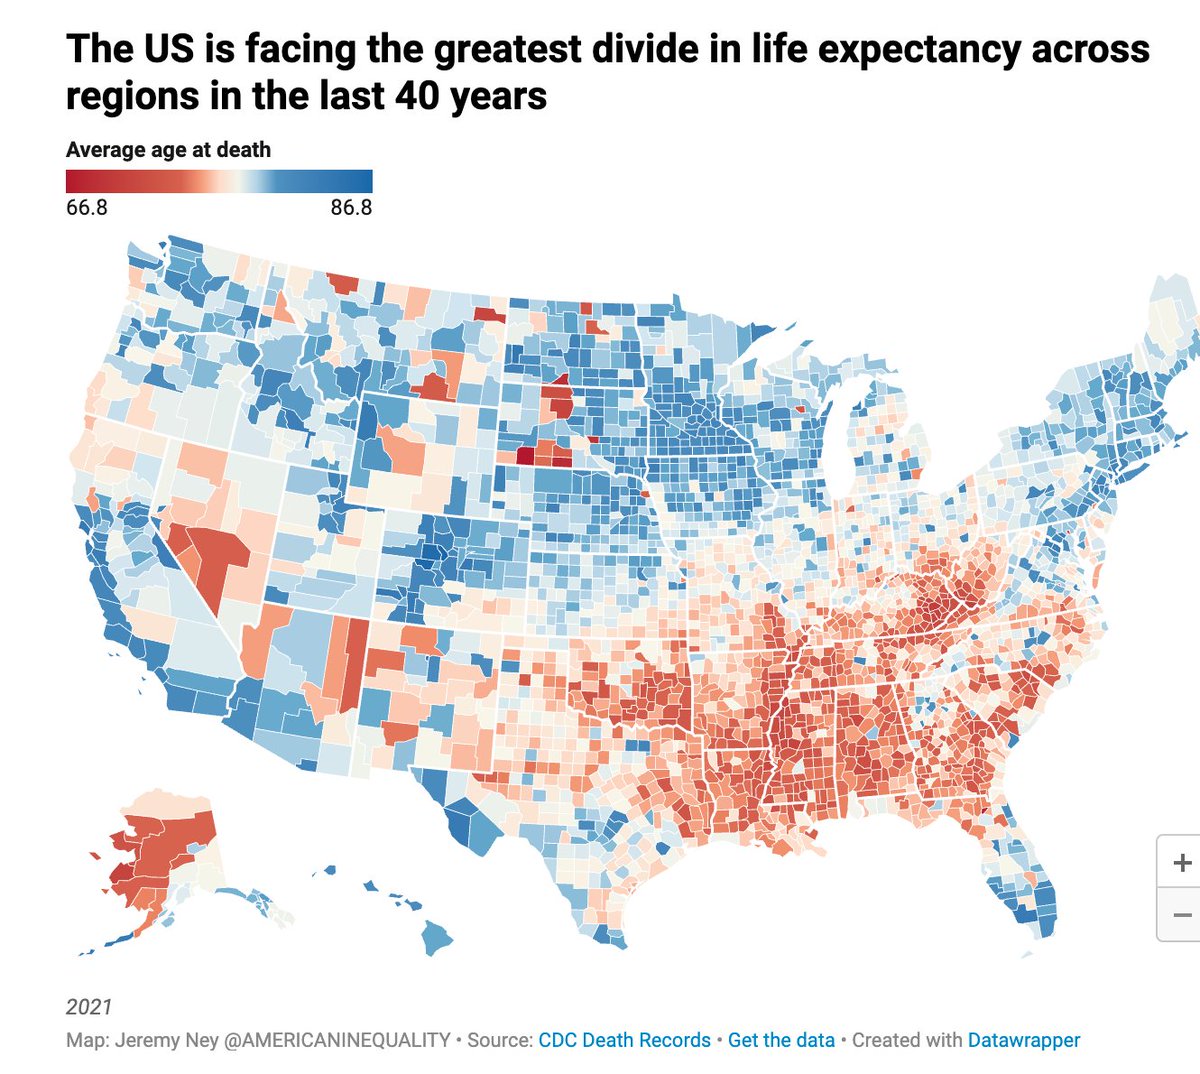 The differences in life expectancy across the US are astonishing. Via @jeremybney medium.com/analytics-vidh…